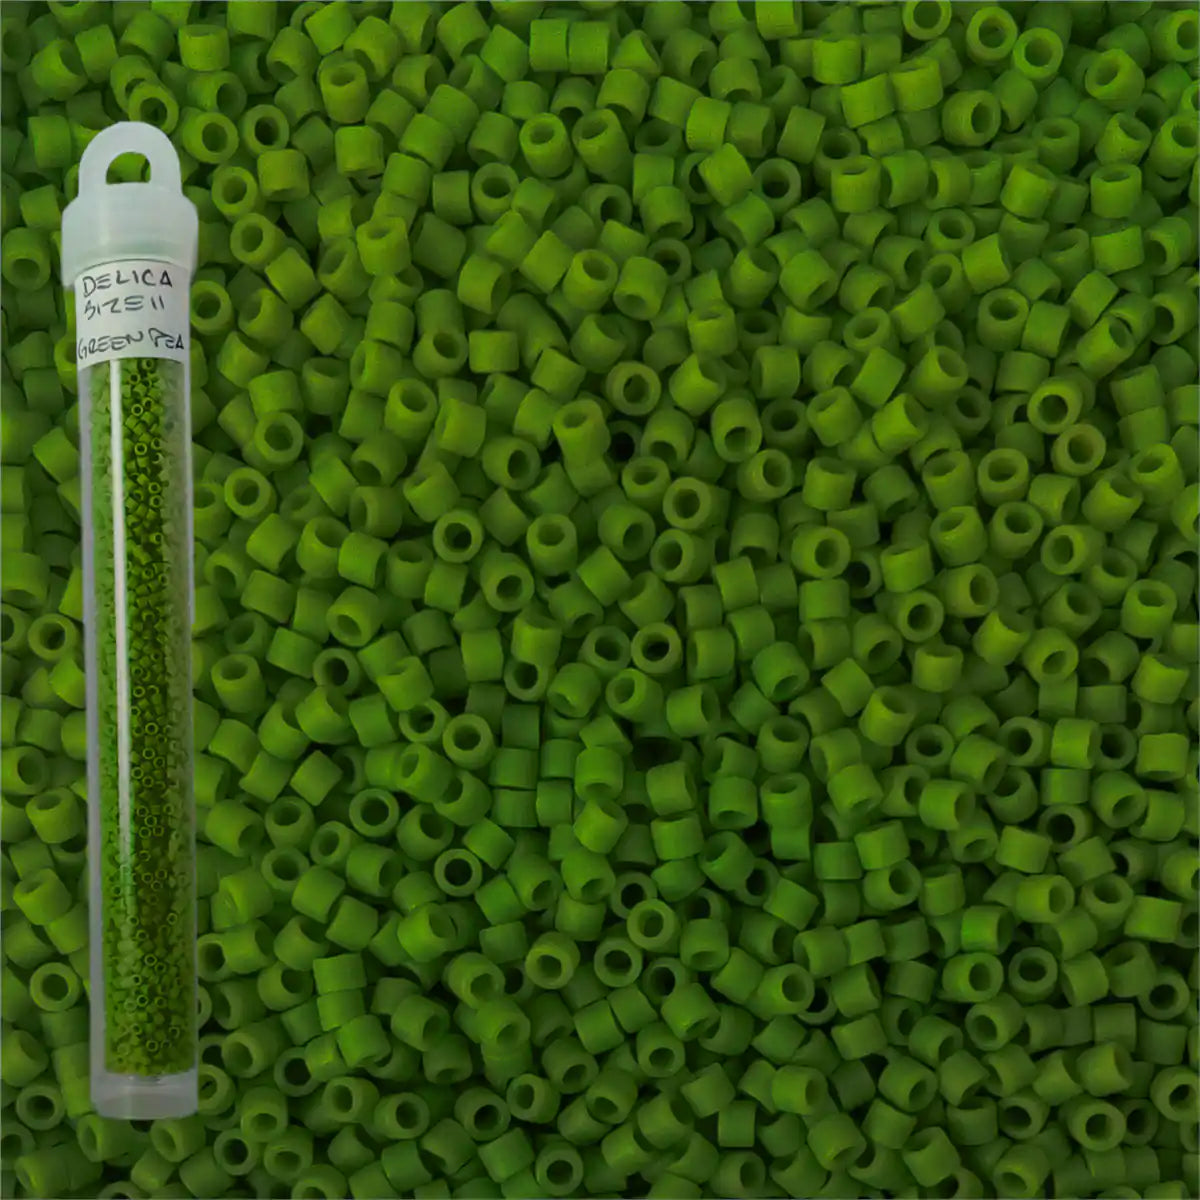 Delica beads pea green size 11